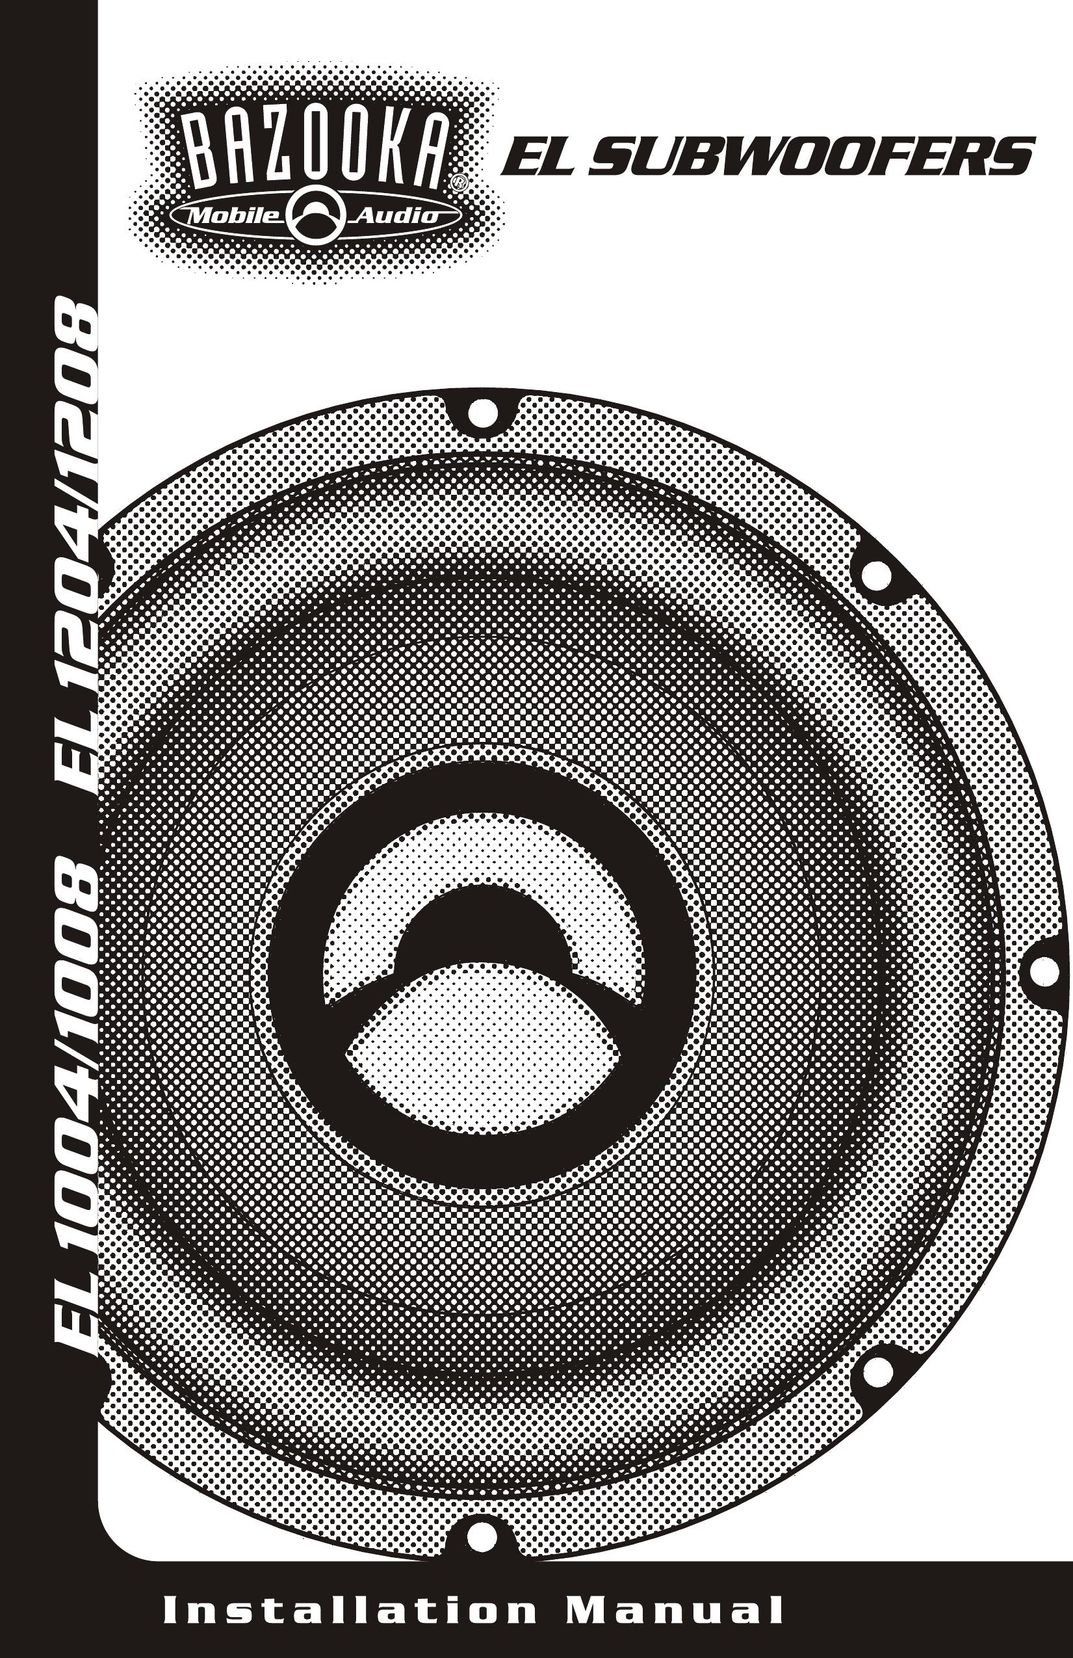 Bazooka EL1204 Speaker User Manual